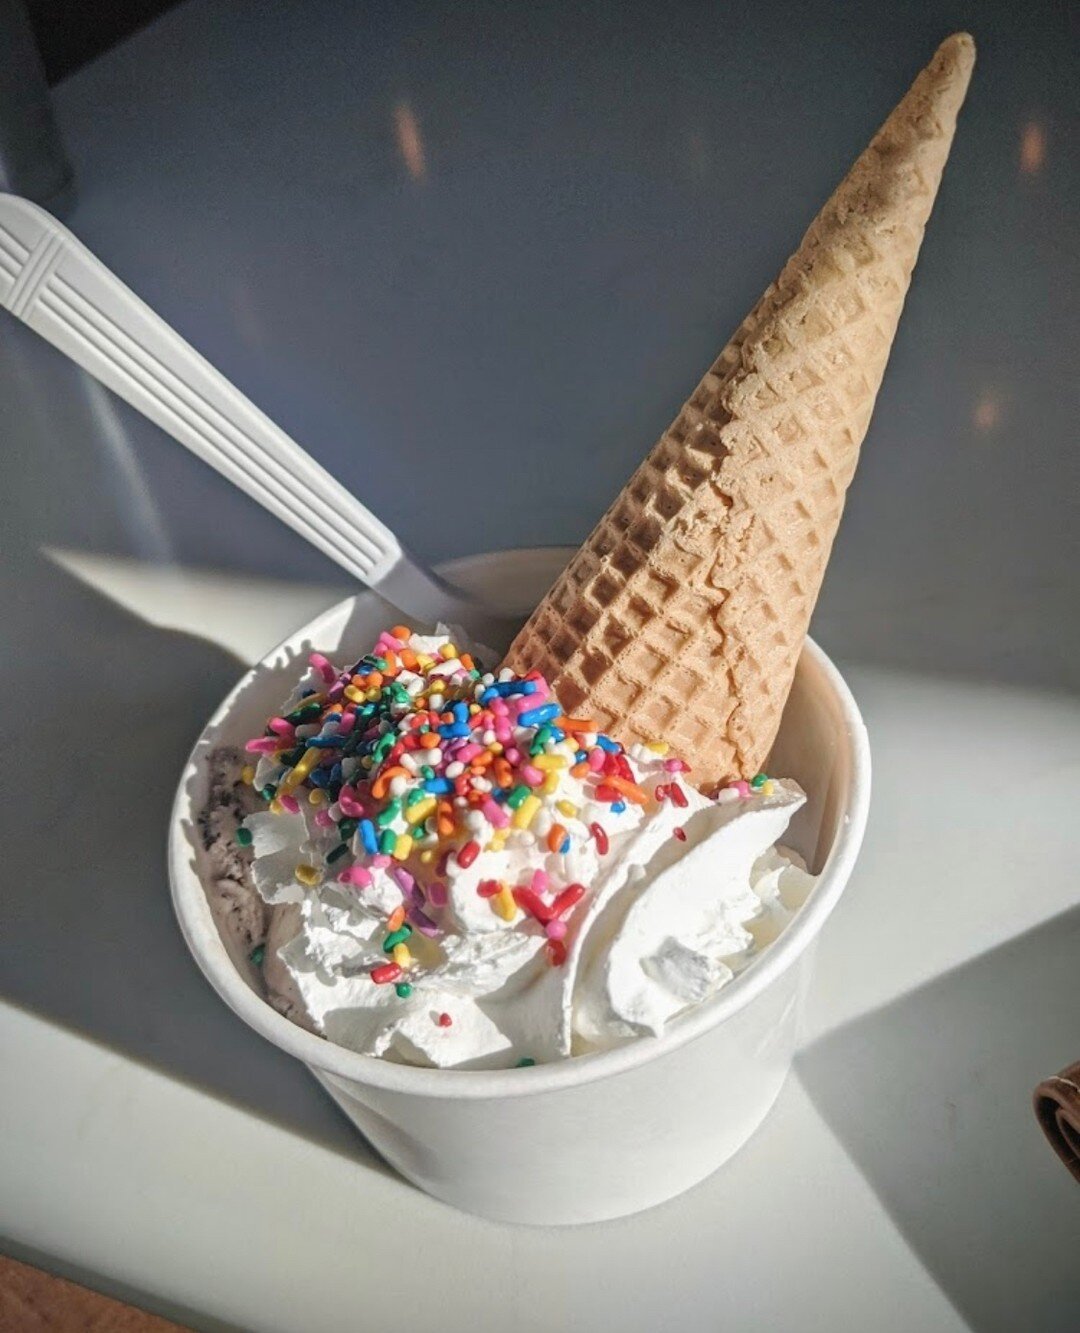 🦄 Calling all unicorns! 🦄⁠
⁠
Your ice cream awaits. ⁠
Don't forget to add extra sprinkles on top!⁠
.⁠
.⁠
.⁠
.⁠
.⁠
.⁠
.⁠
.⁠
.⁠
#🦄 #denver #denversbest #denverfood #denverdesserts #denvericecream #denverlocals #denverlocal #denverfoodie #denverresta